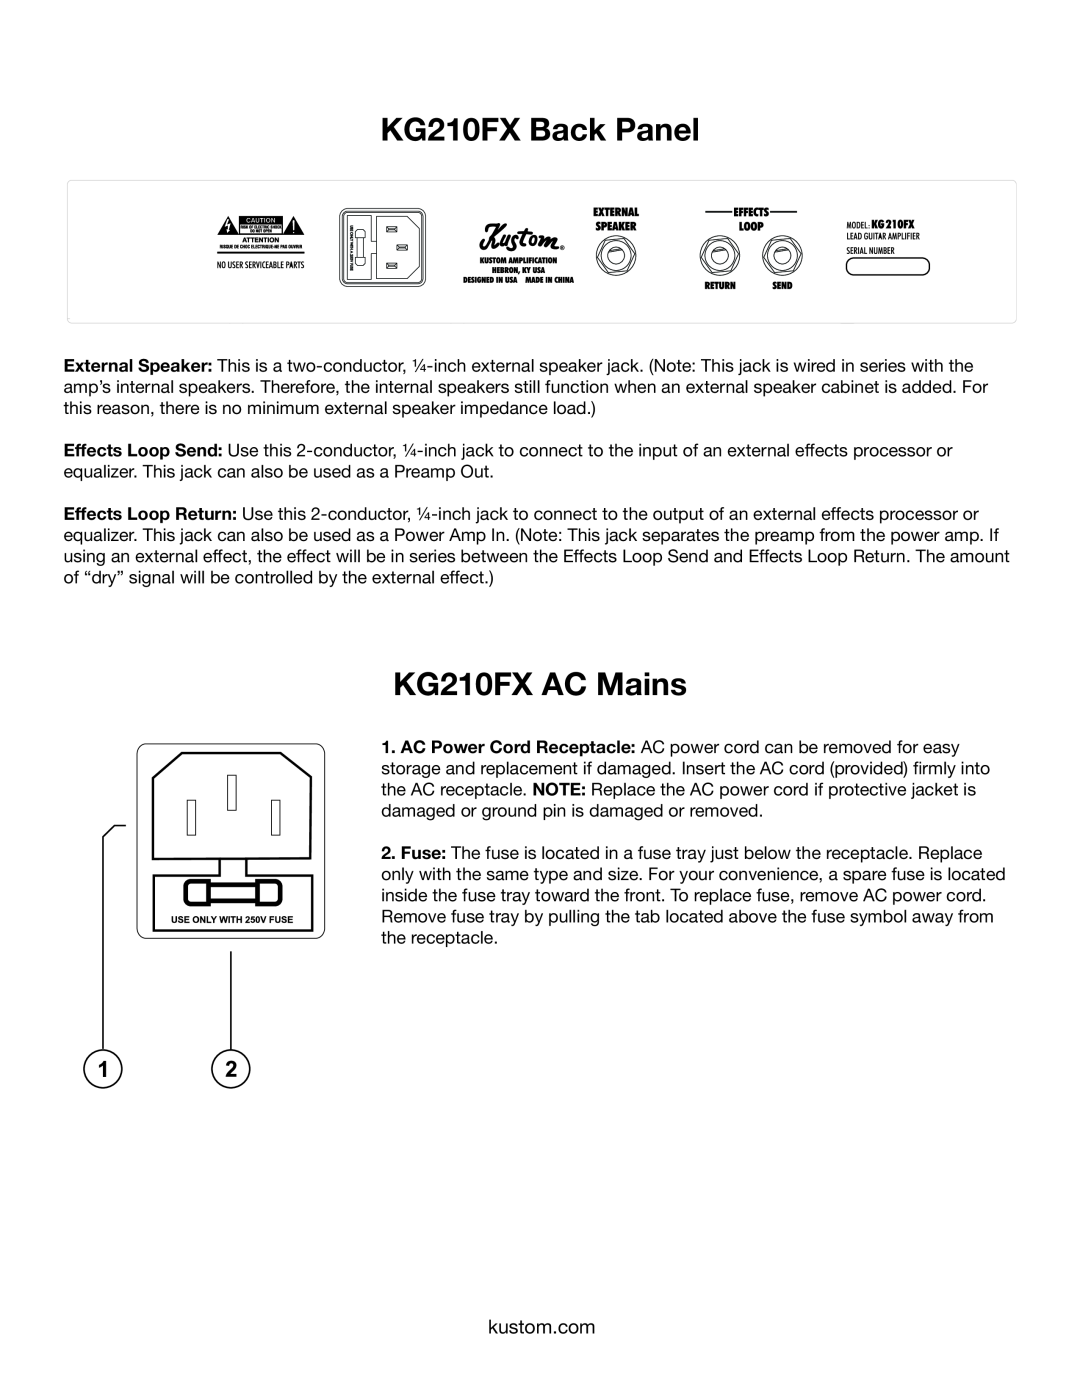 Kustom owner manual KG210FX Back Panel, KG210FX AC Mains 